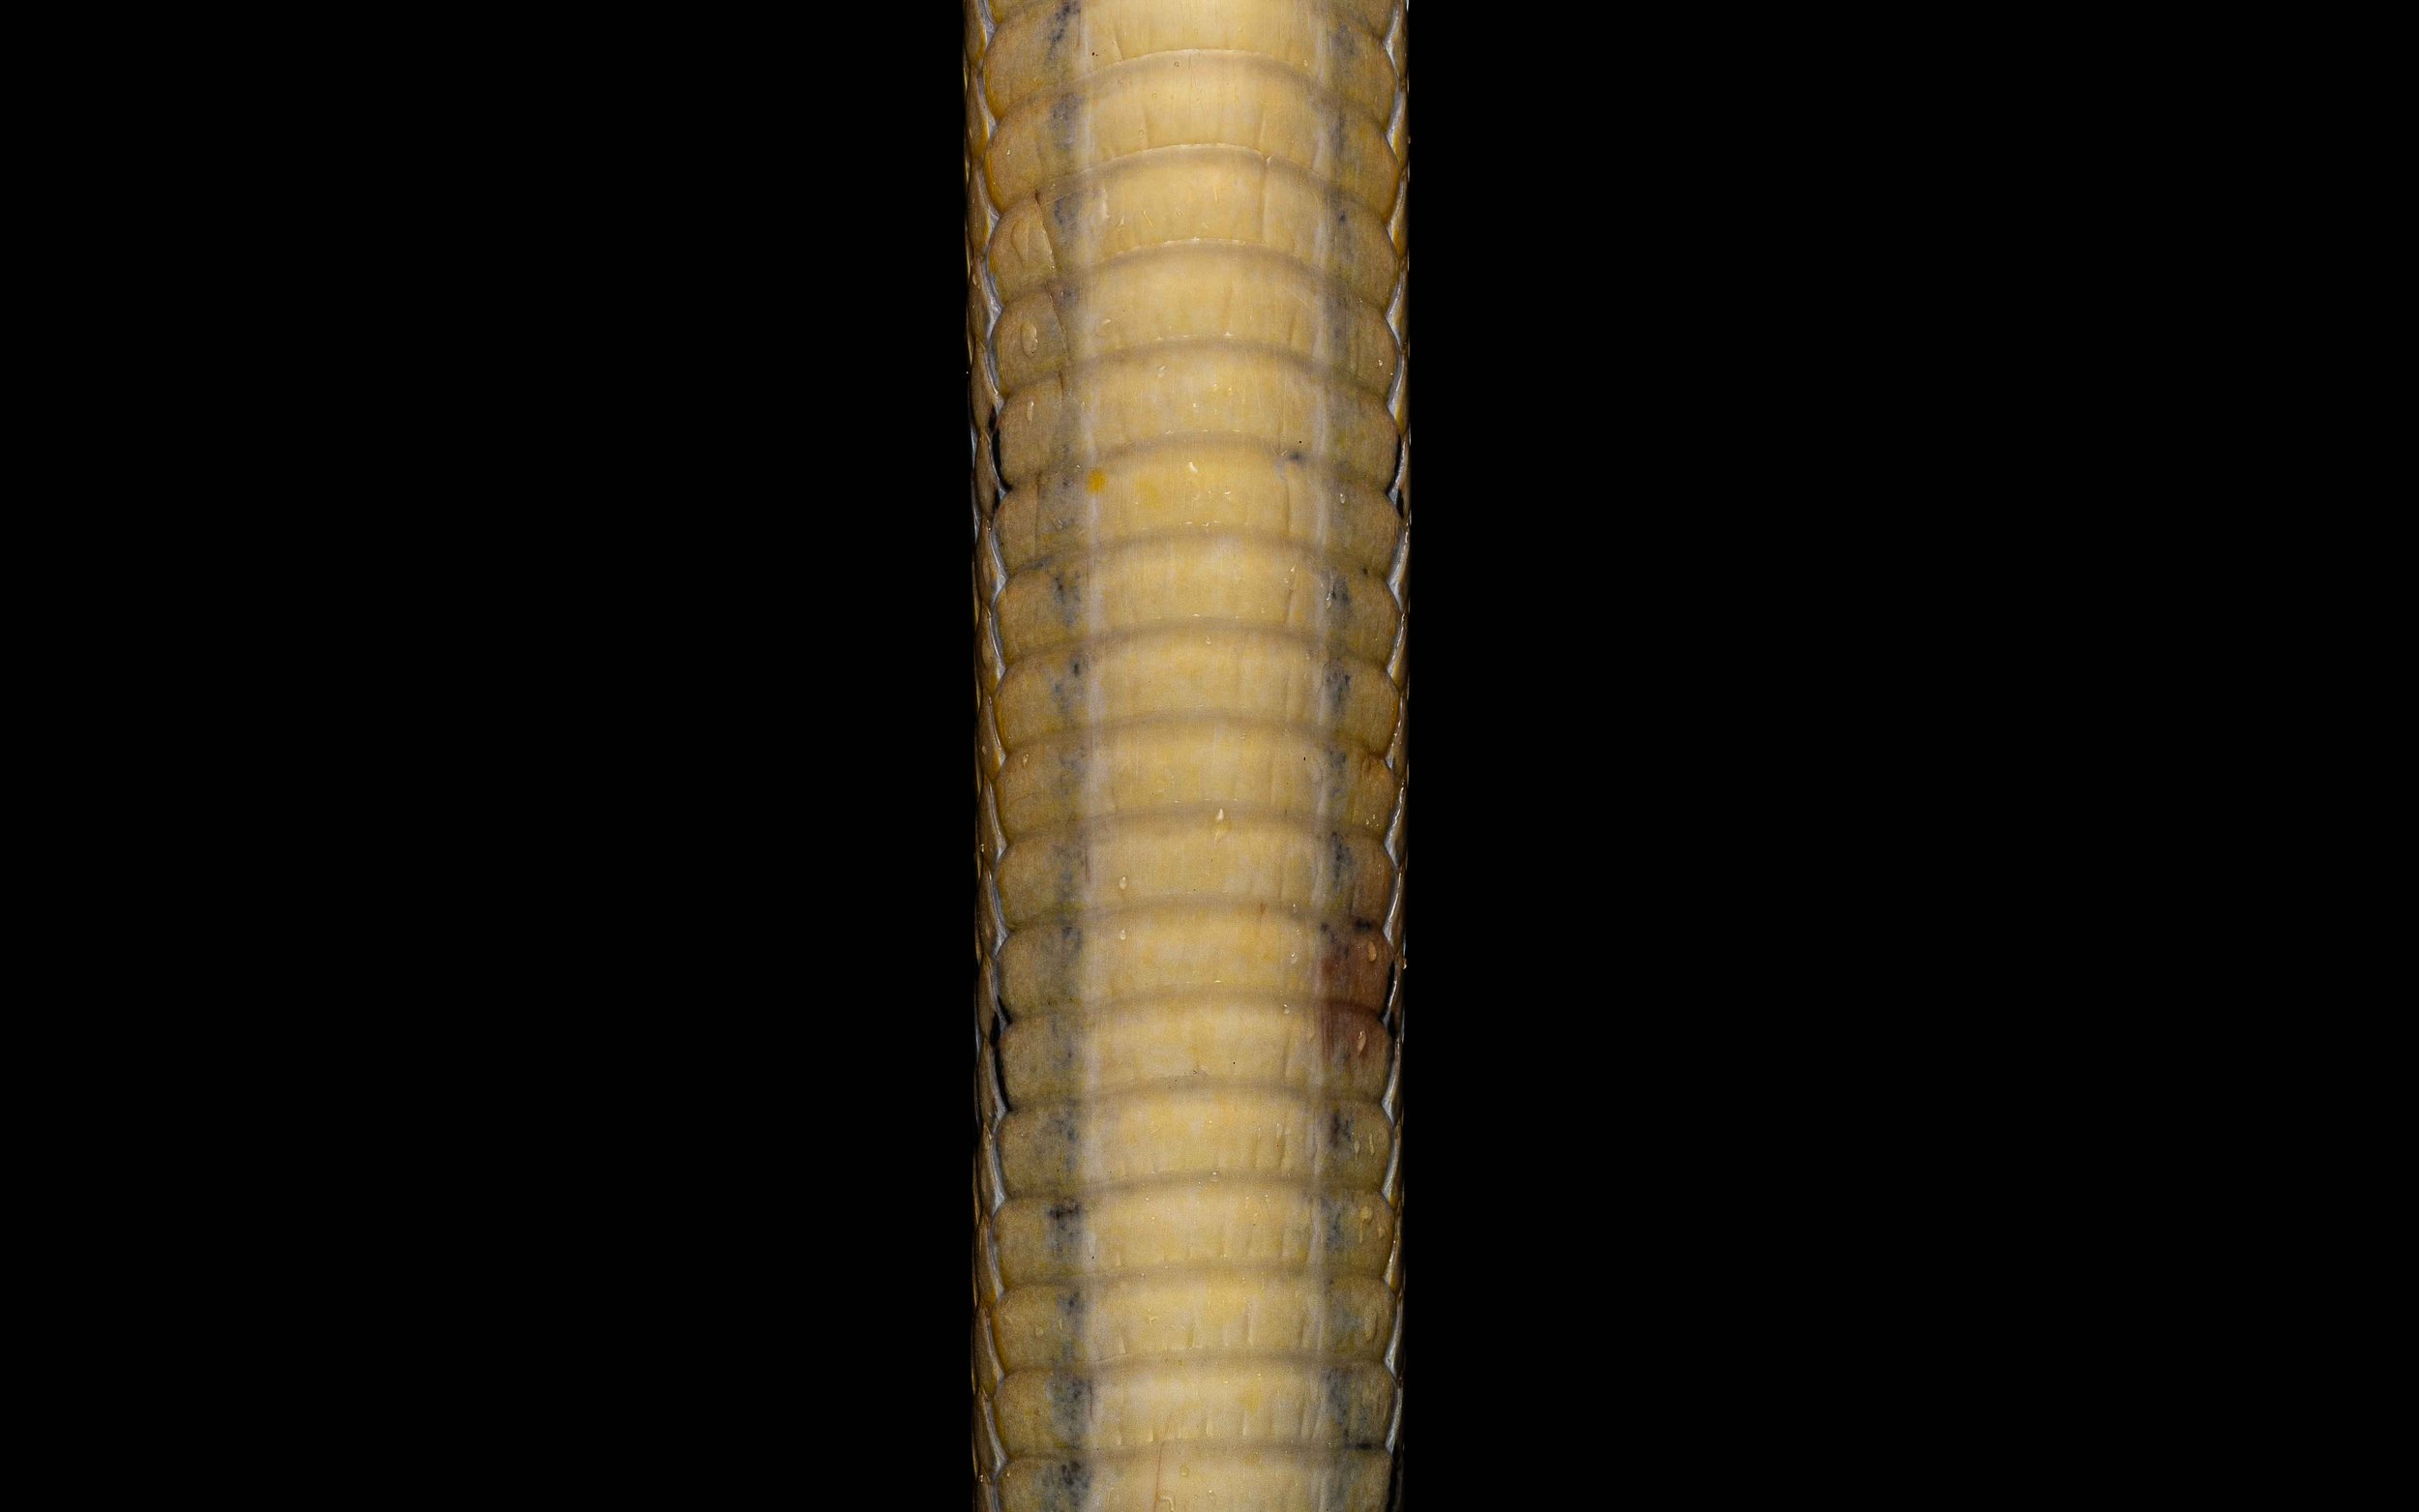 Copperhead Racer - Coelognathus radiatus